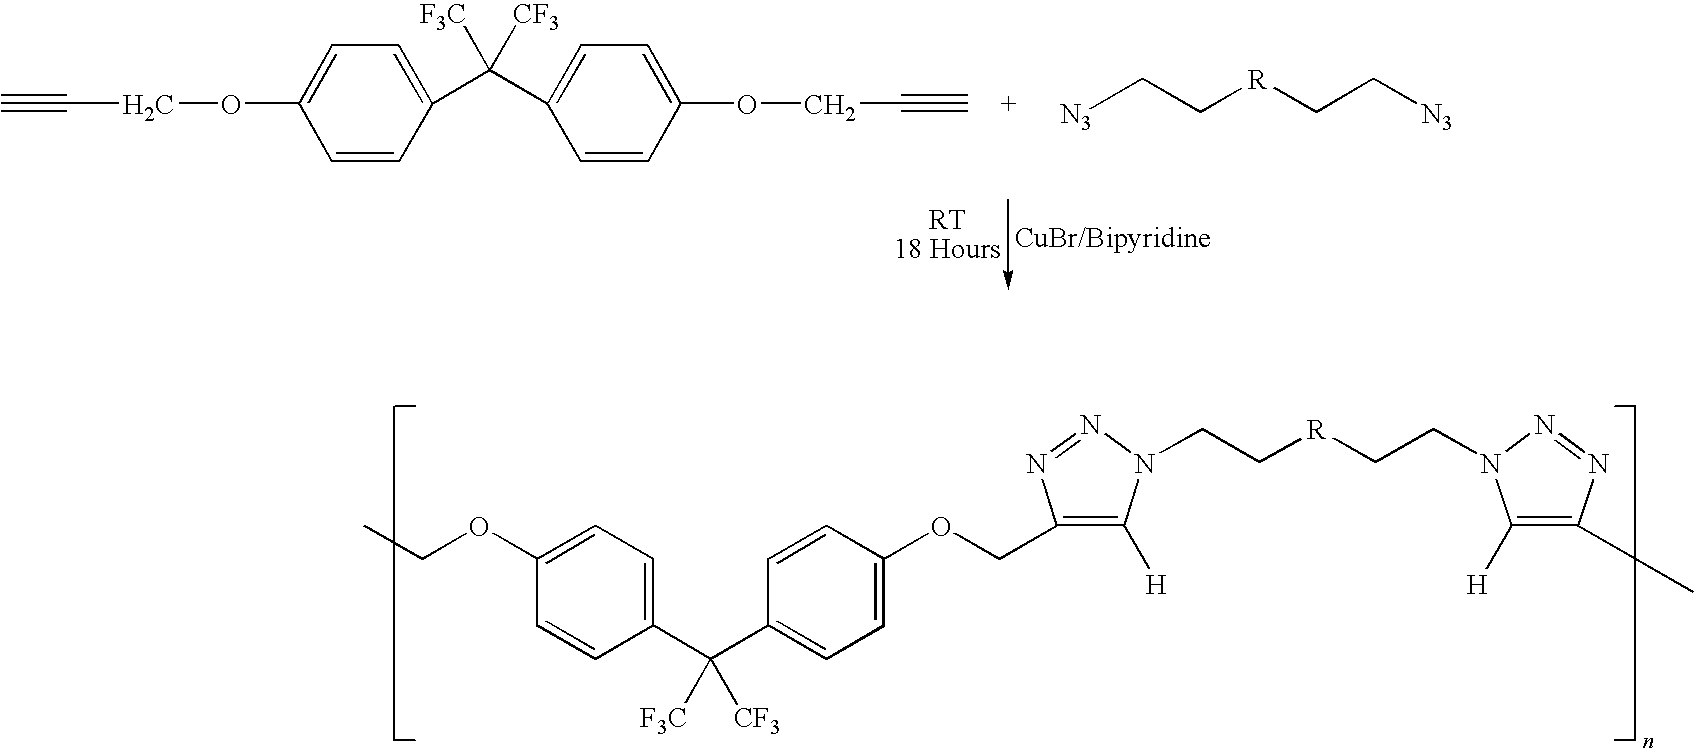 Copolycondensation polymerization of fluoropolymers